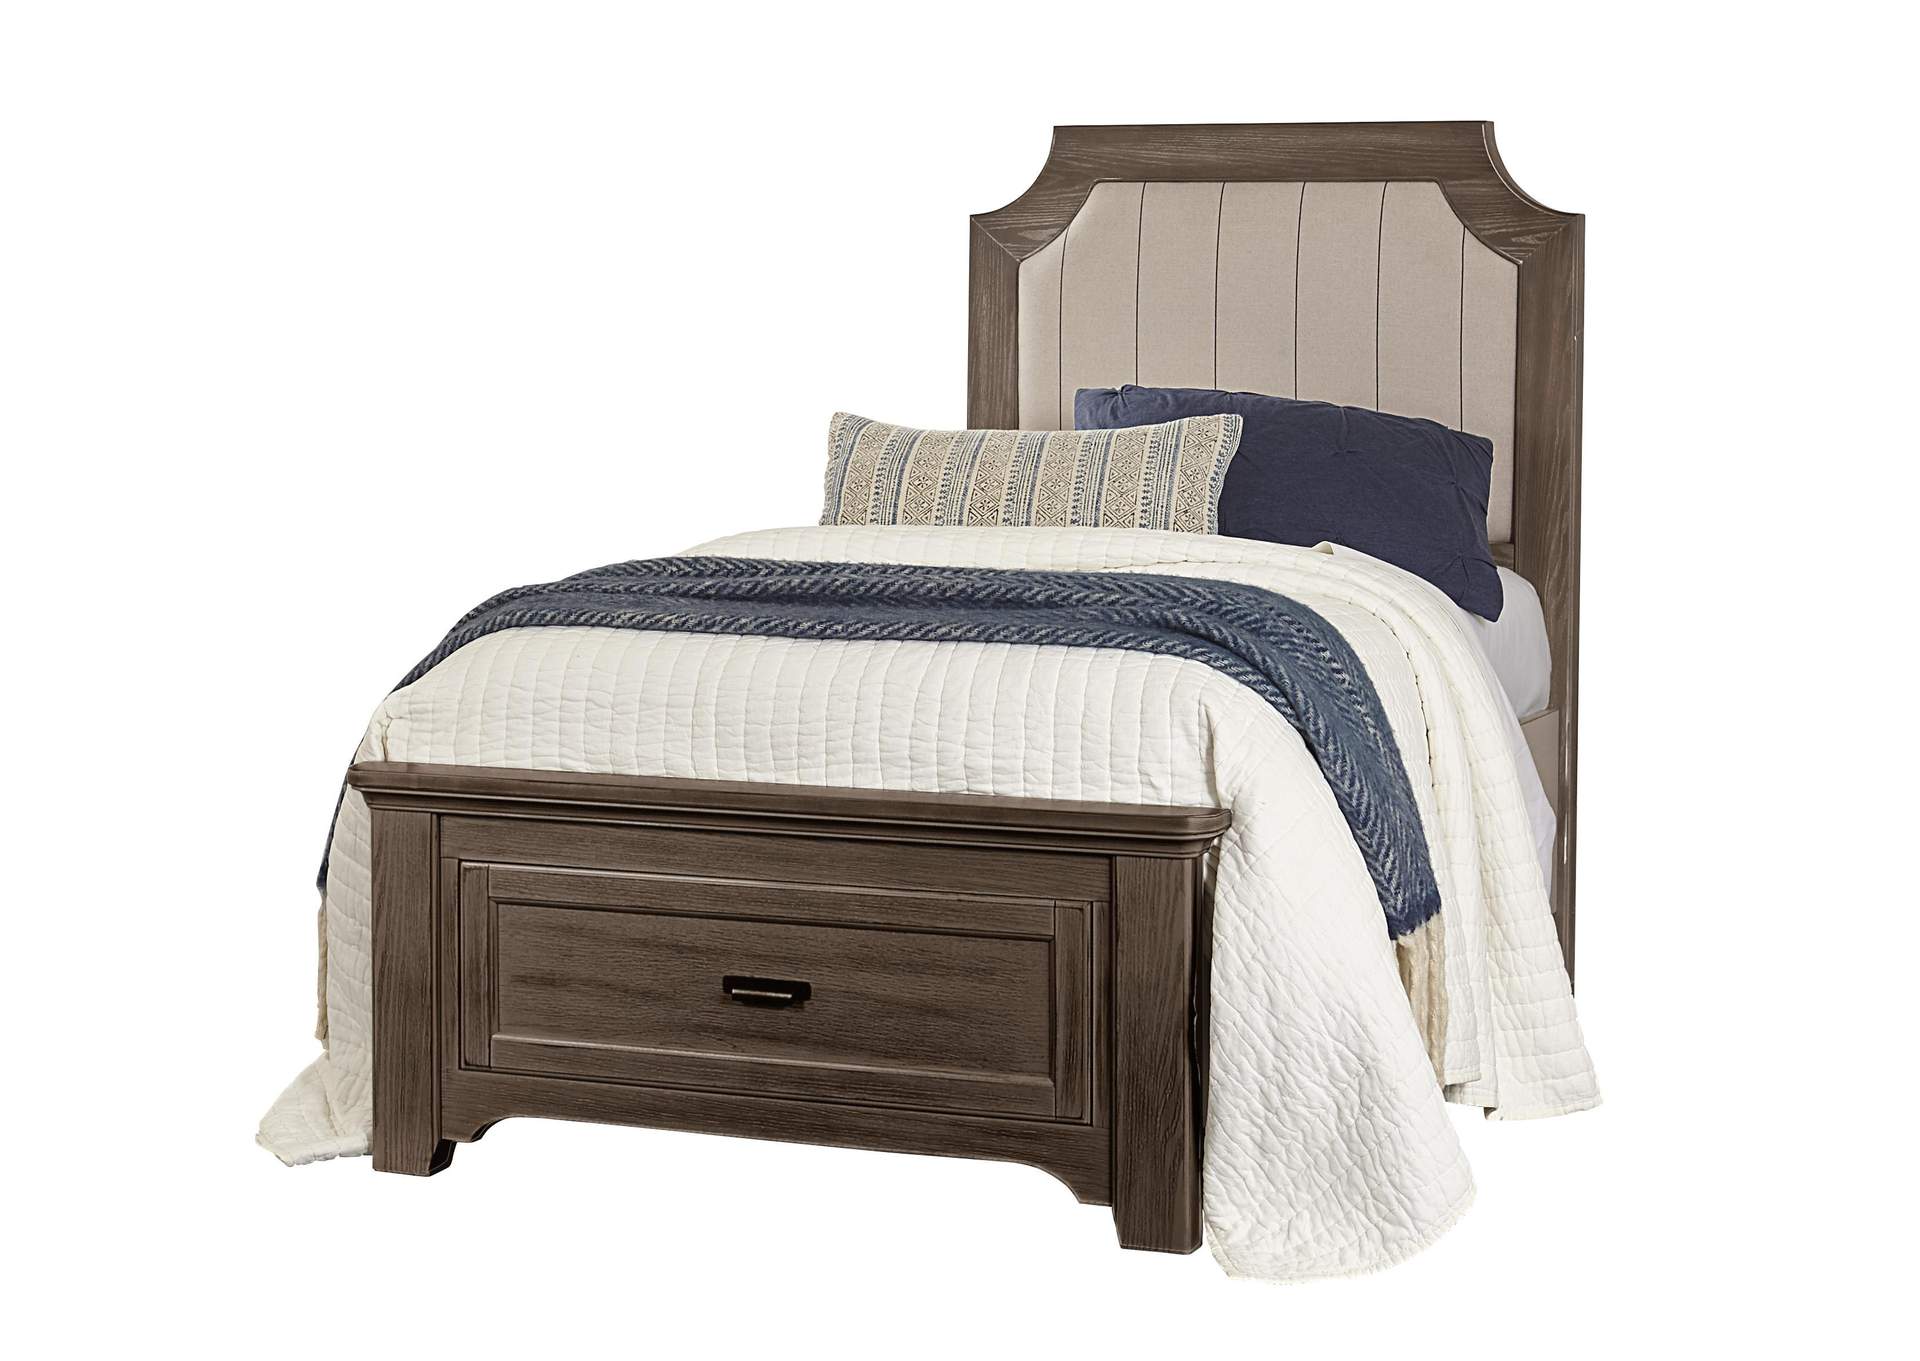 Bungalow Cararra Upholstered Twin Bed & Storage,Vaughan-Bassett